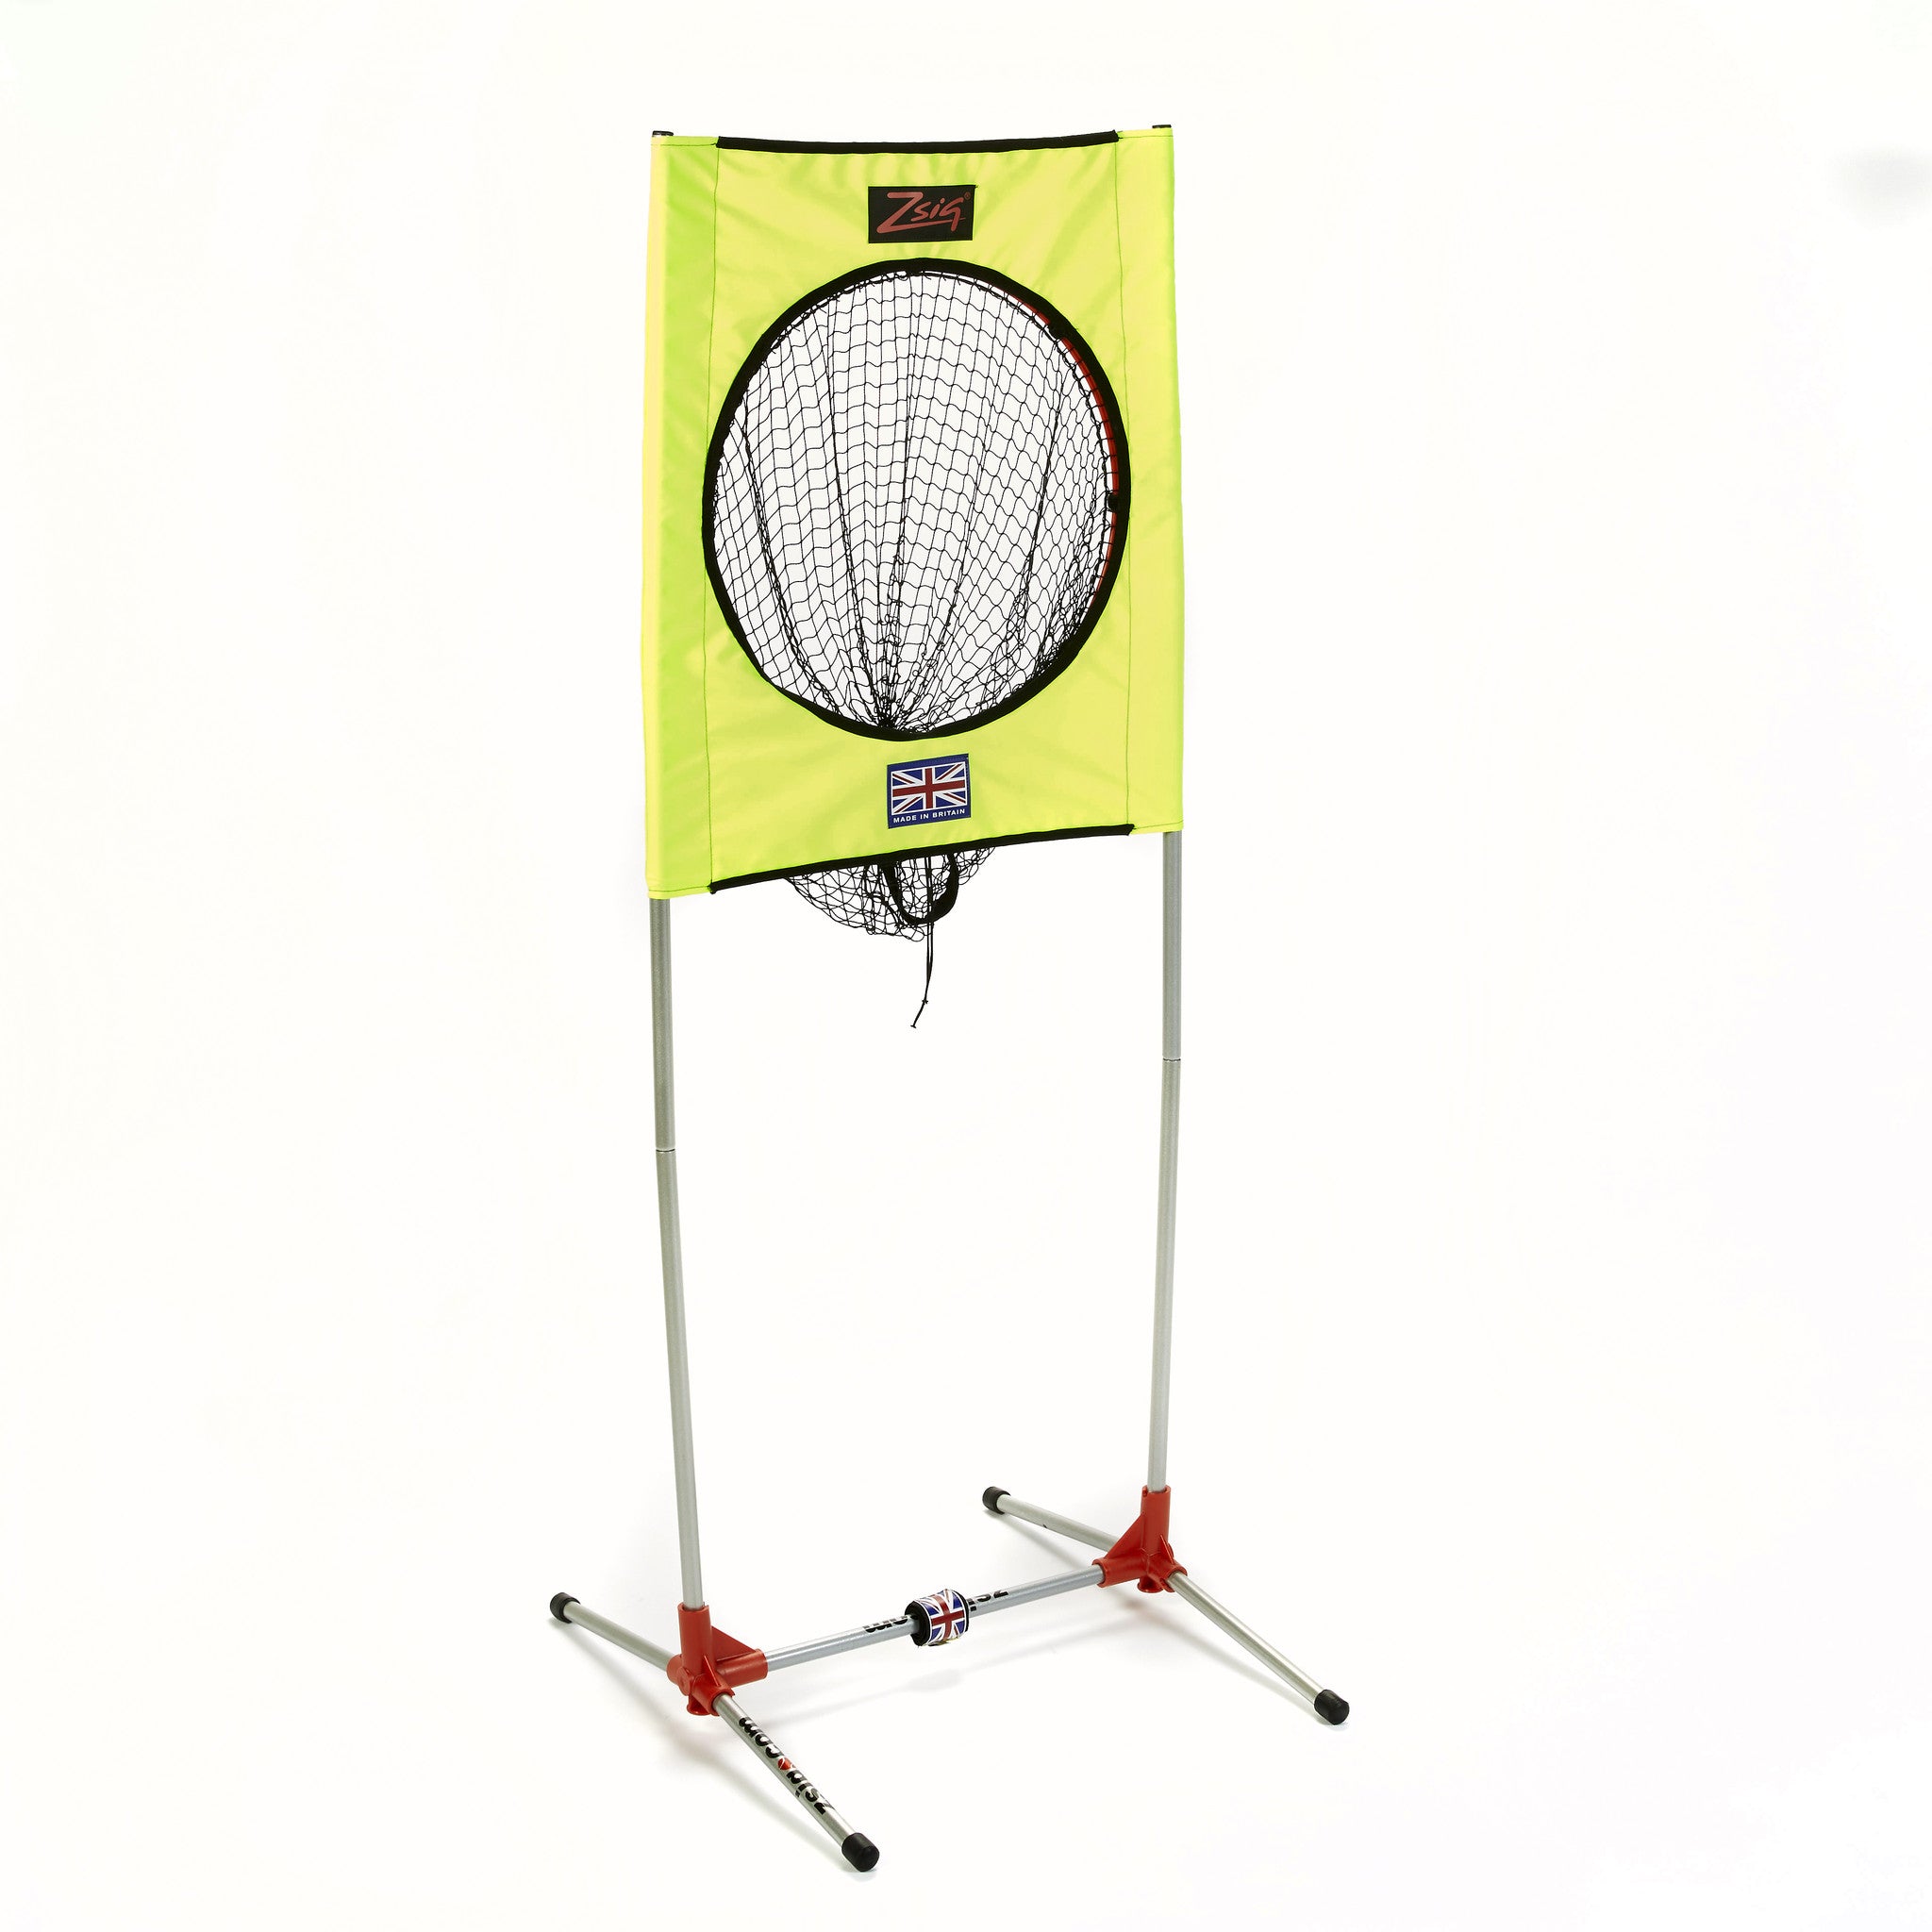 Tennis Coaching Aid - portable Target Tennis Trainer